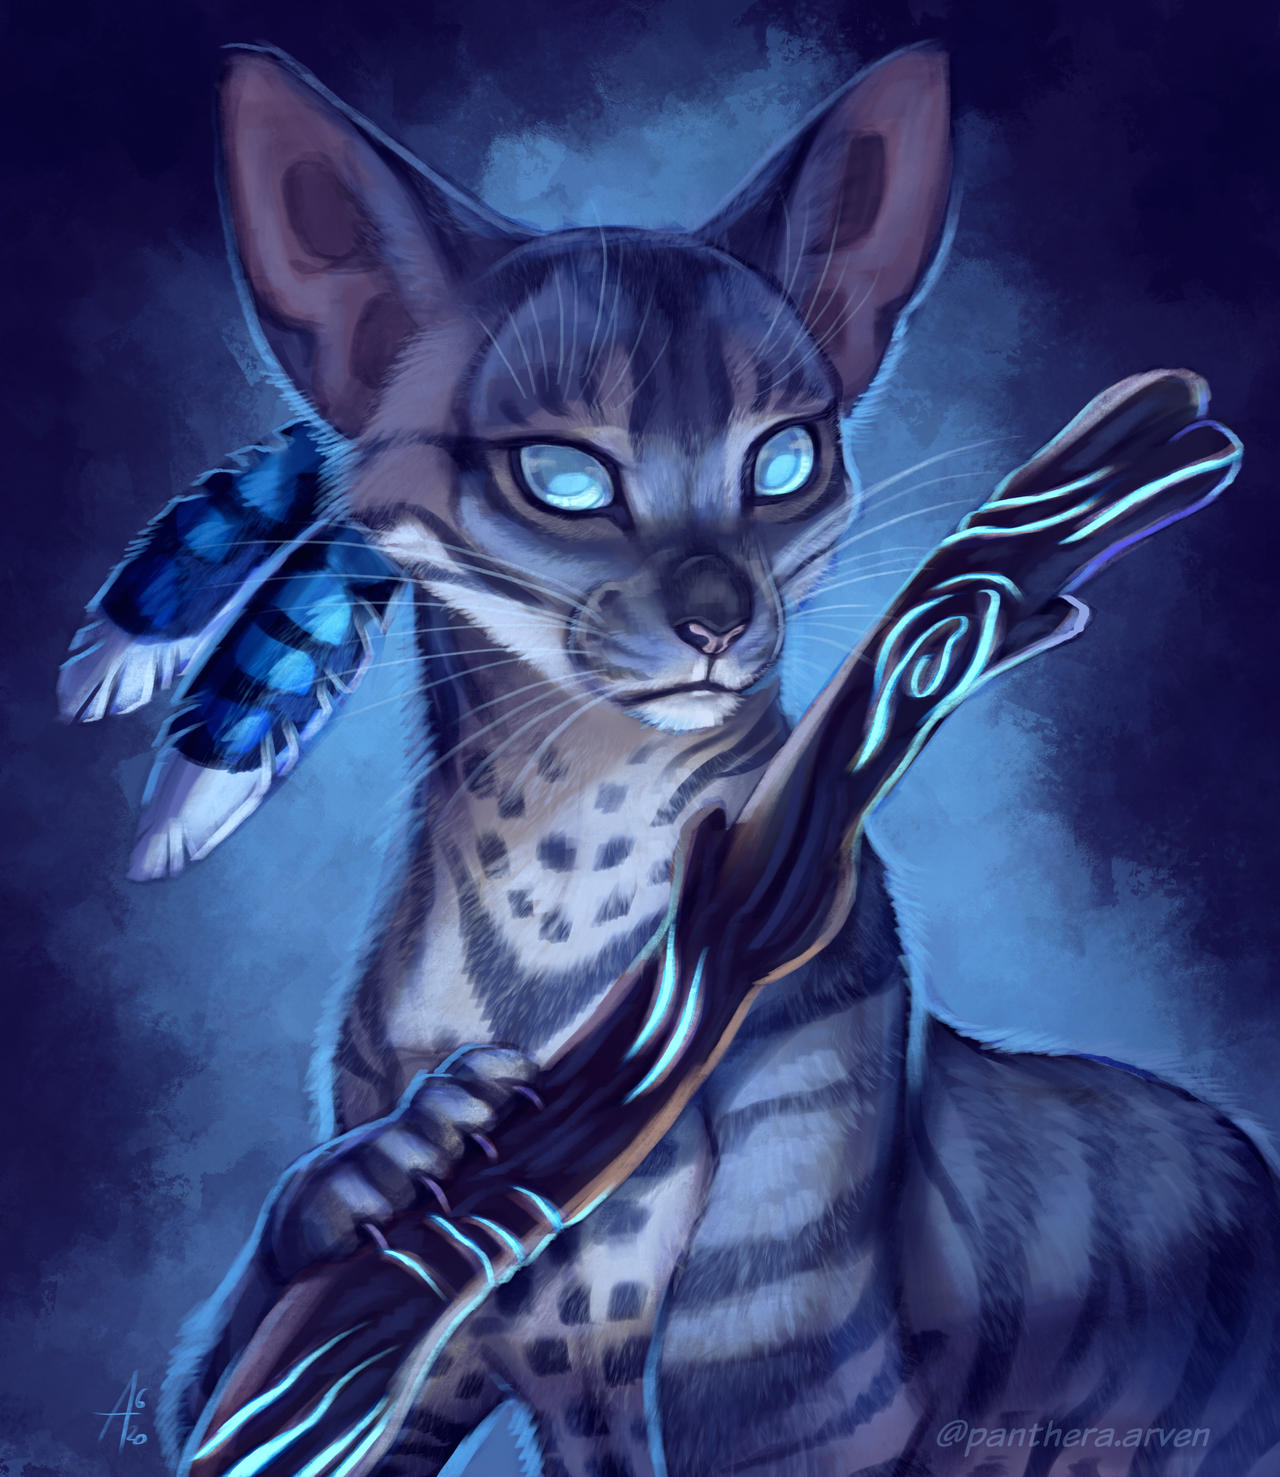 Warrior Cats characters - Jayfeather by Kocurzyca on DeviantArt